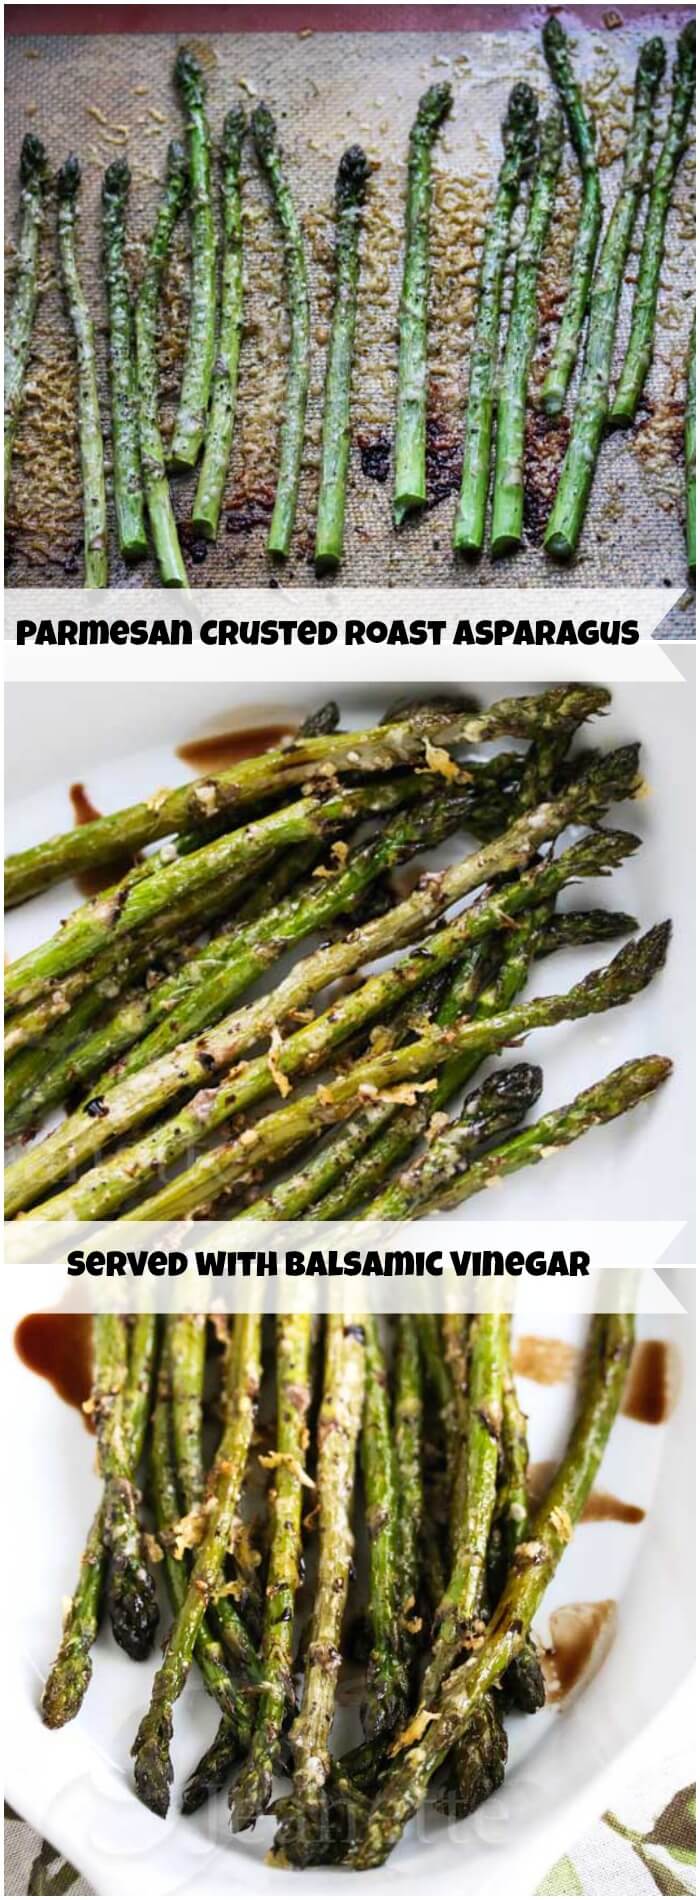 Parmesan Crusted Asparagus with Balsamic Vinegar